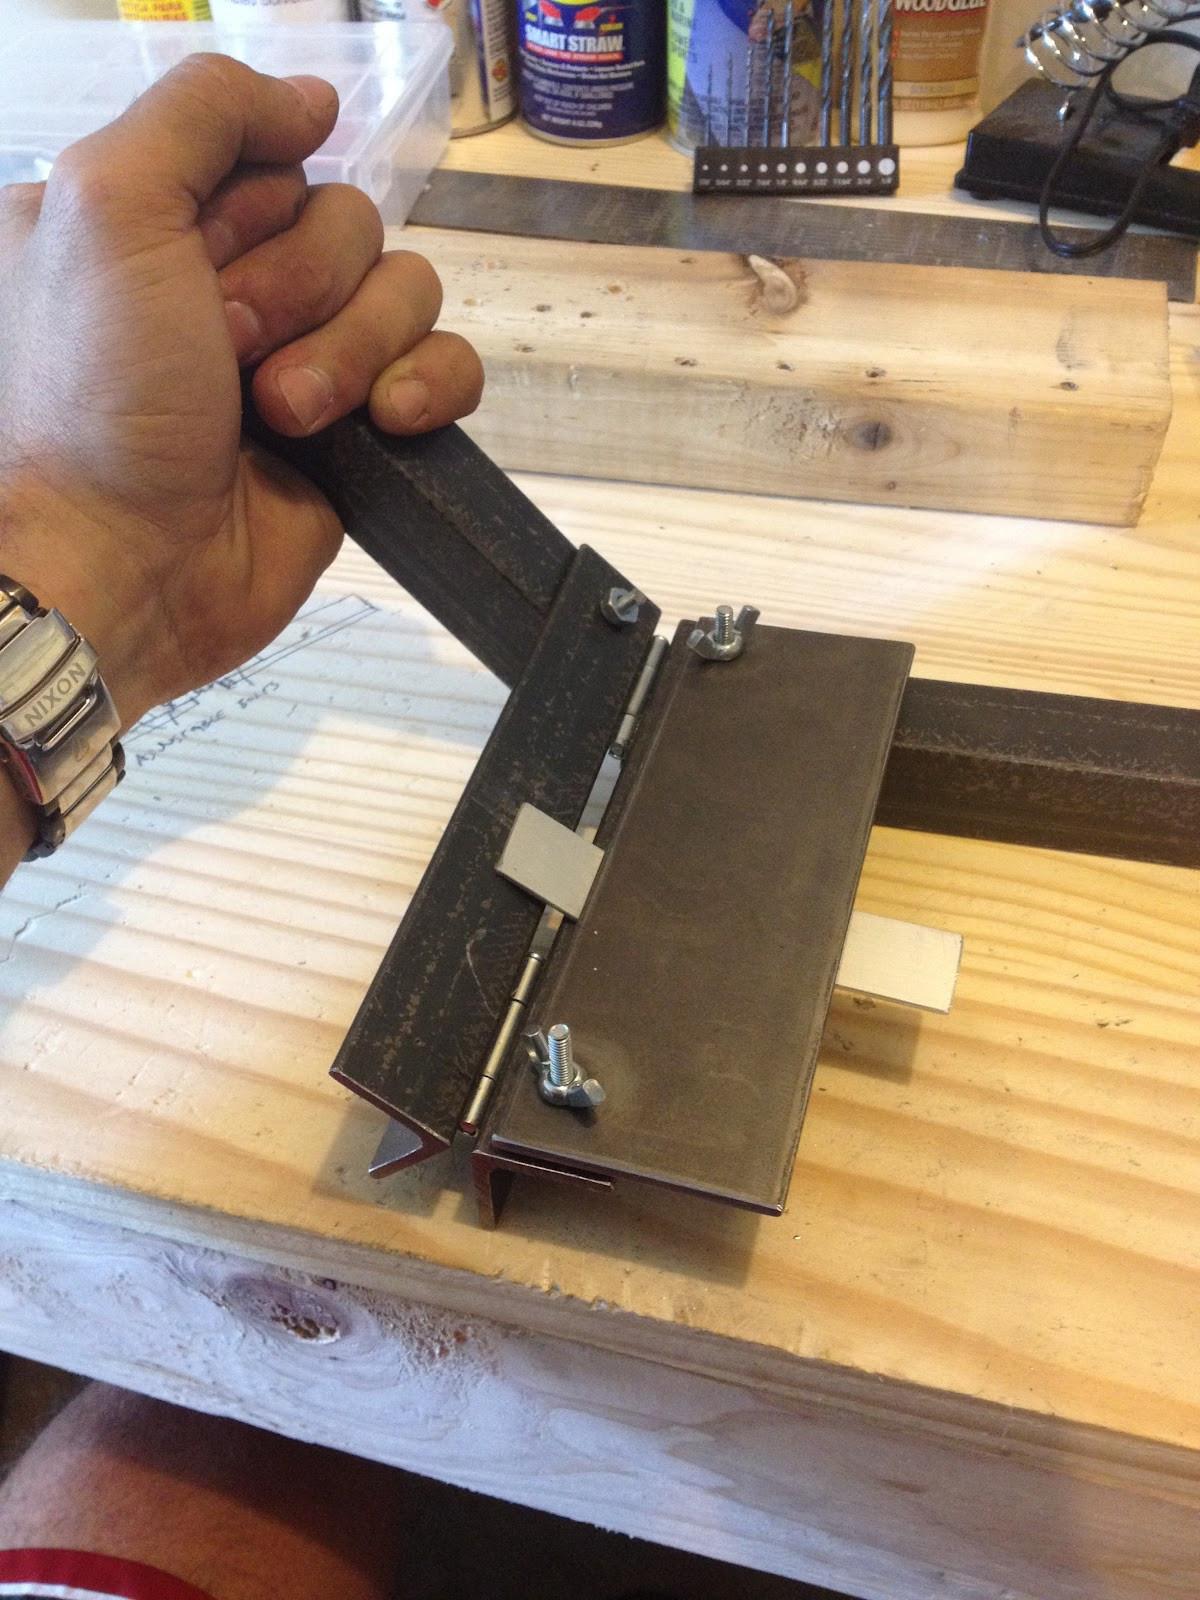 Best ideas about DIY Sheetmetal Brake
. Save or Pin Somewhere in the boundary layer DIY Metal Brake Now.